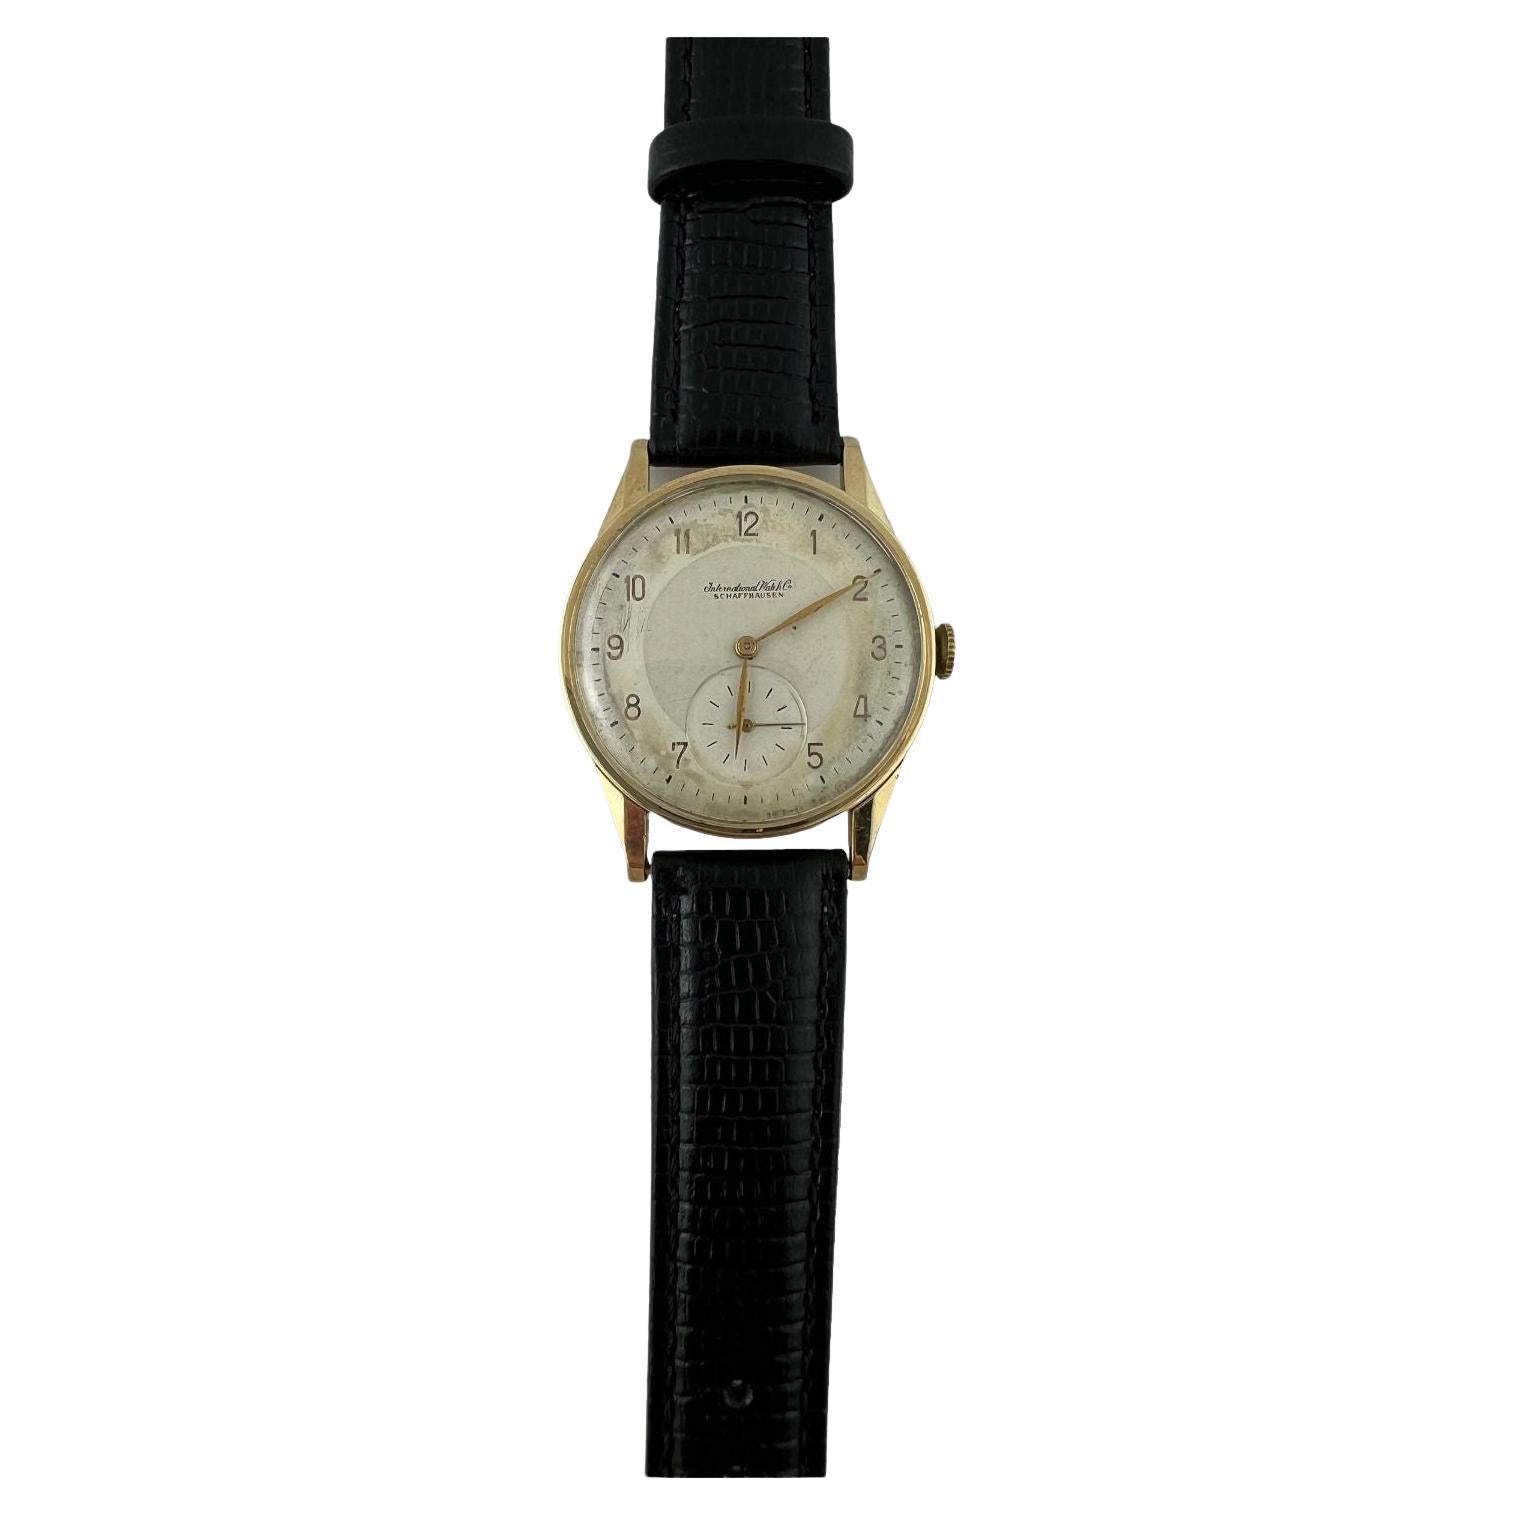 IWC Automatic アンティーク 腕時計(アナログ) 時計 メンズ 激安価格で販売